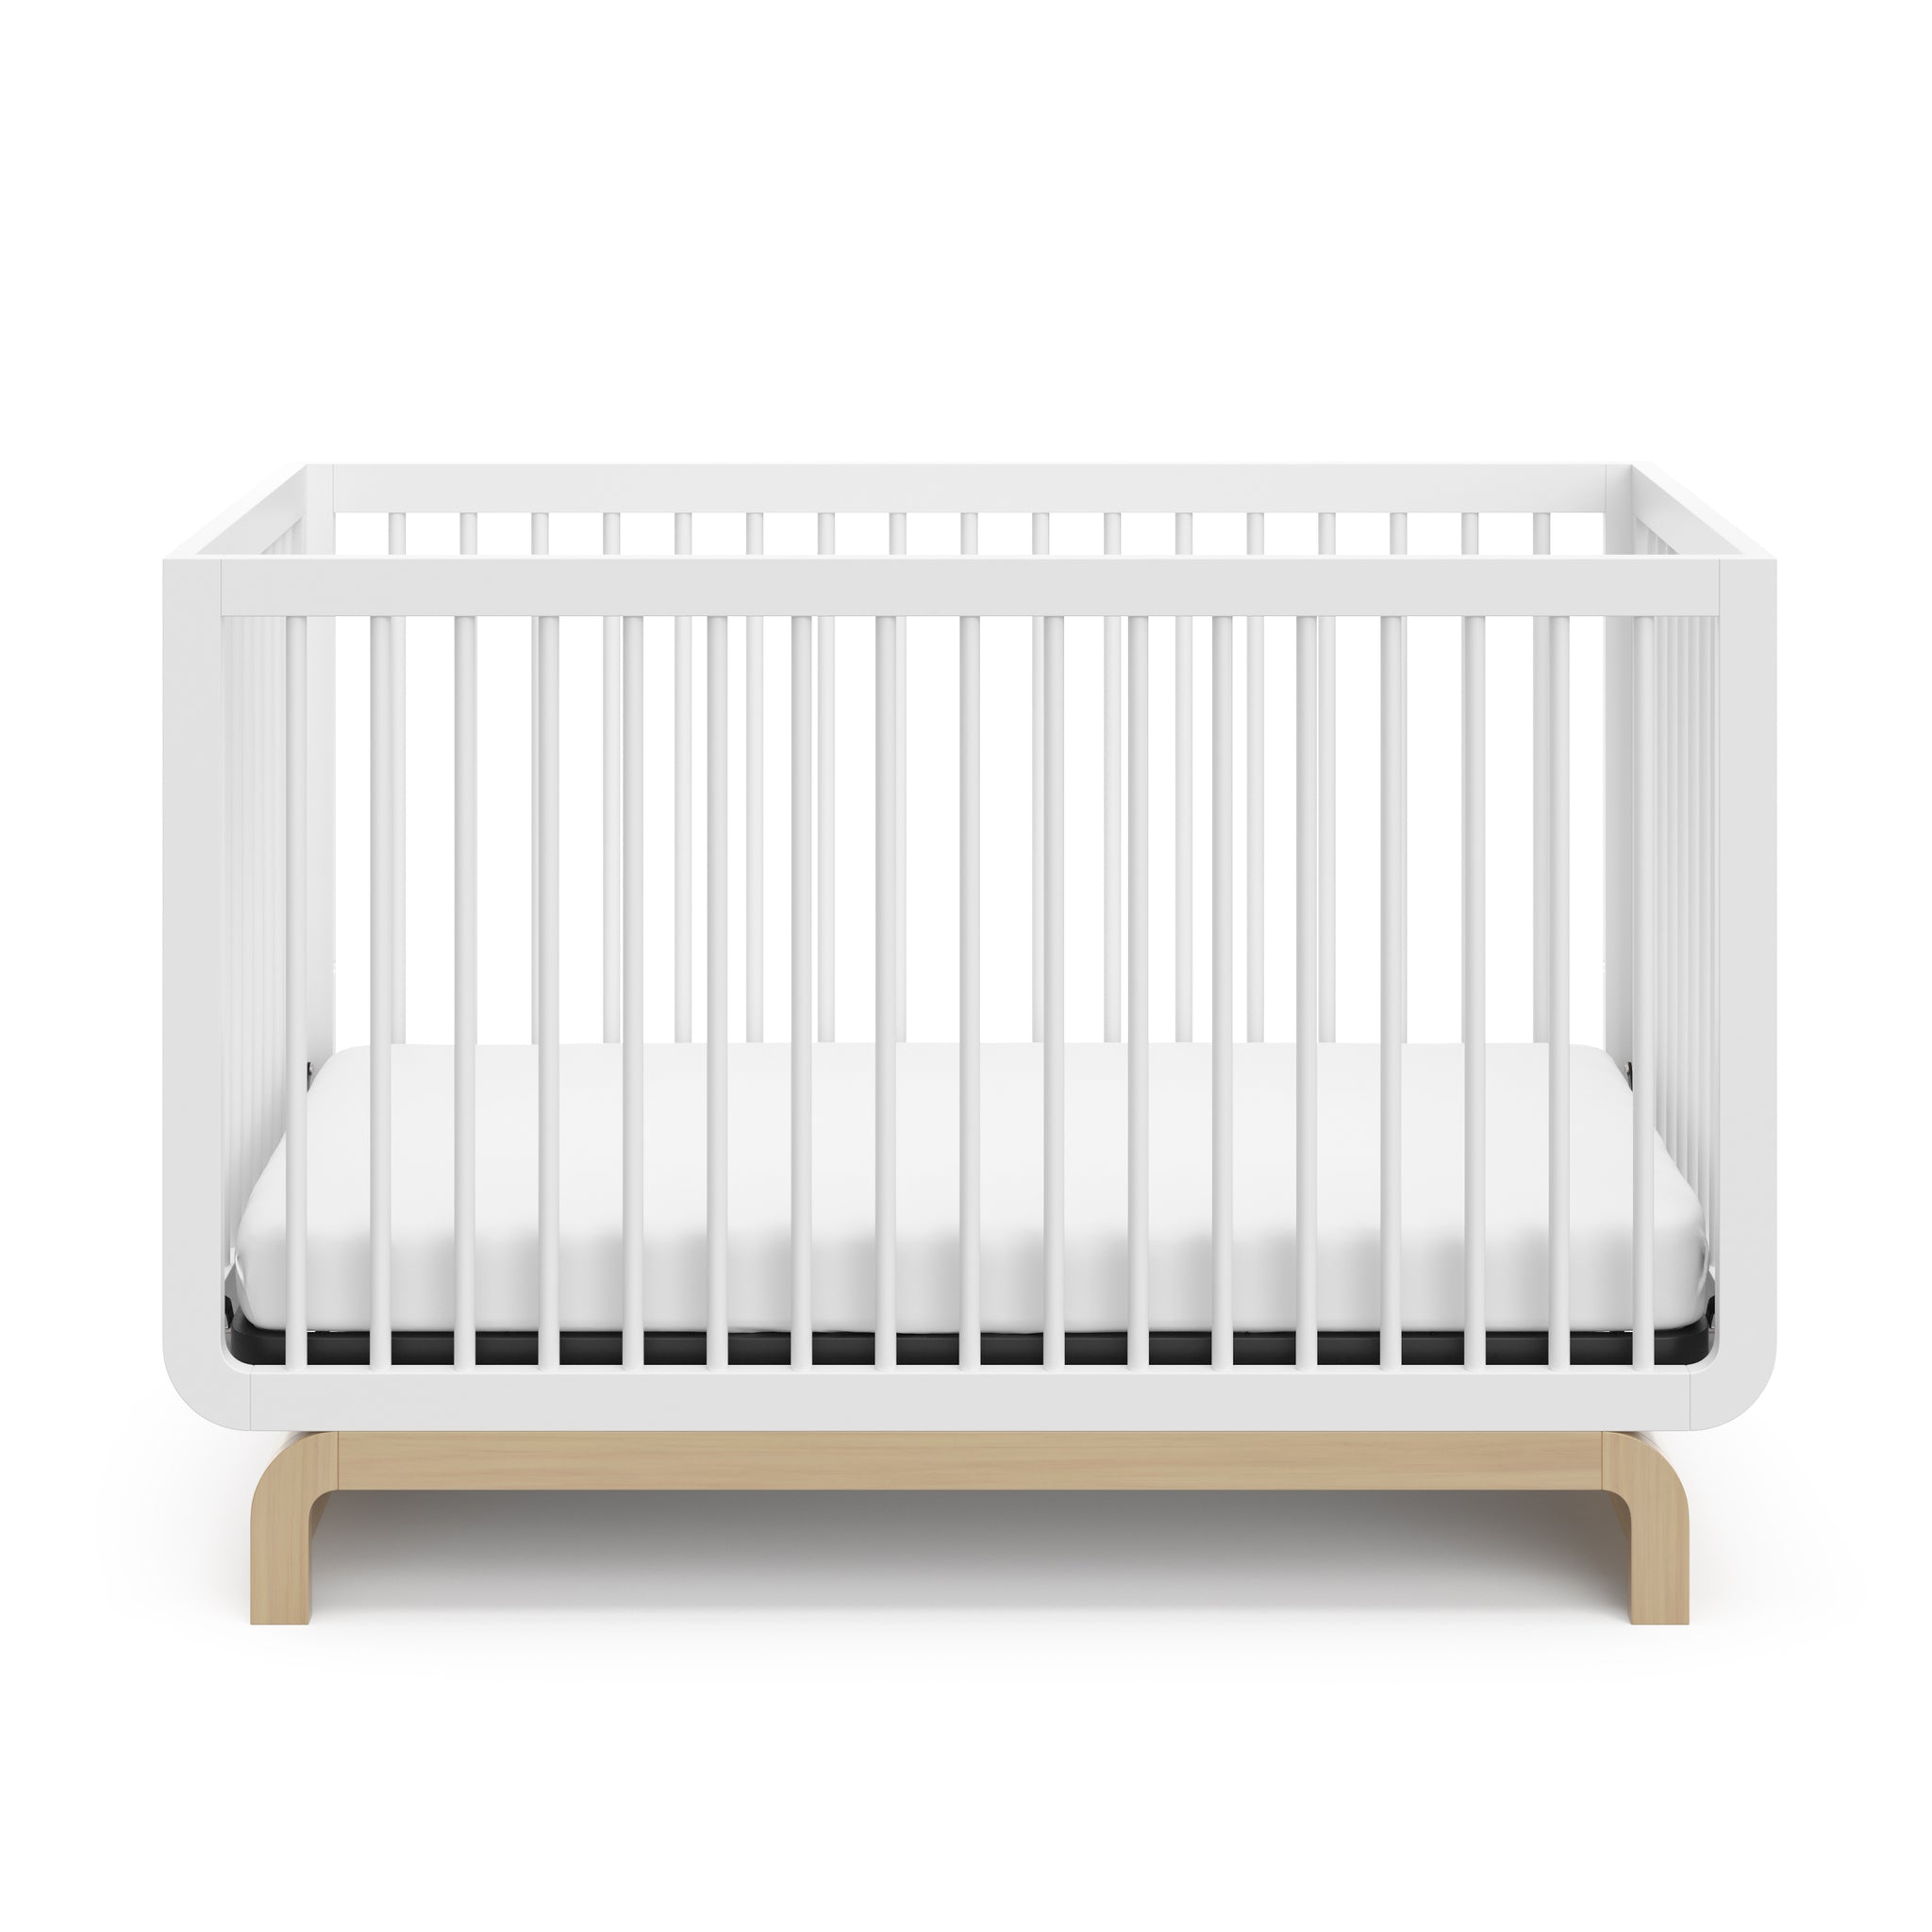 Two-tone white and natural wood baby crib, at a front-facing angle